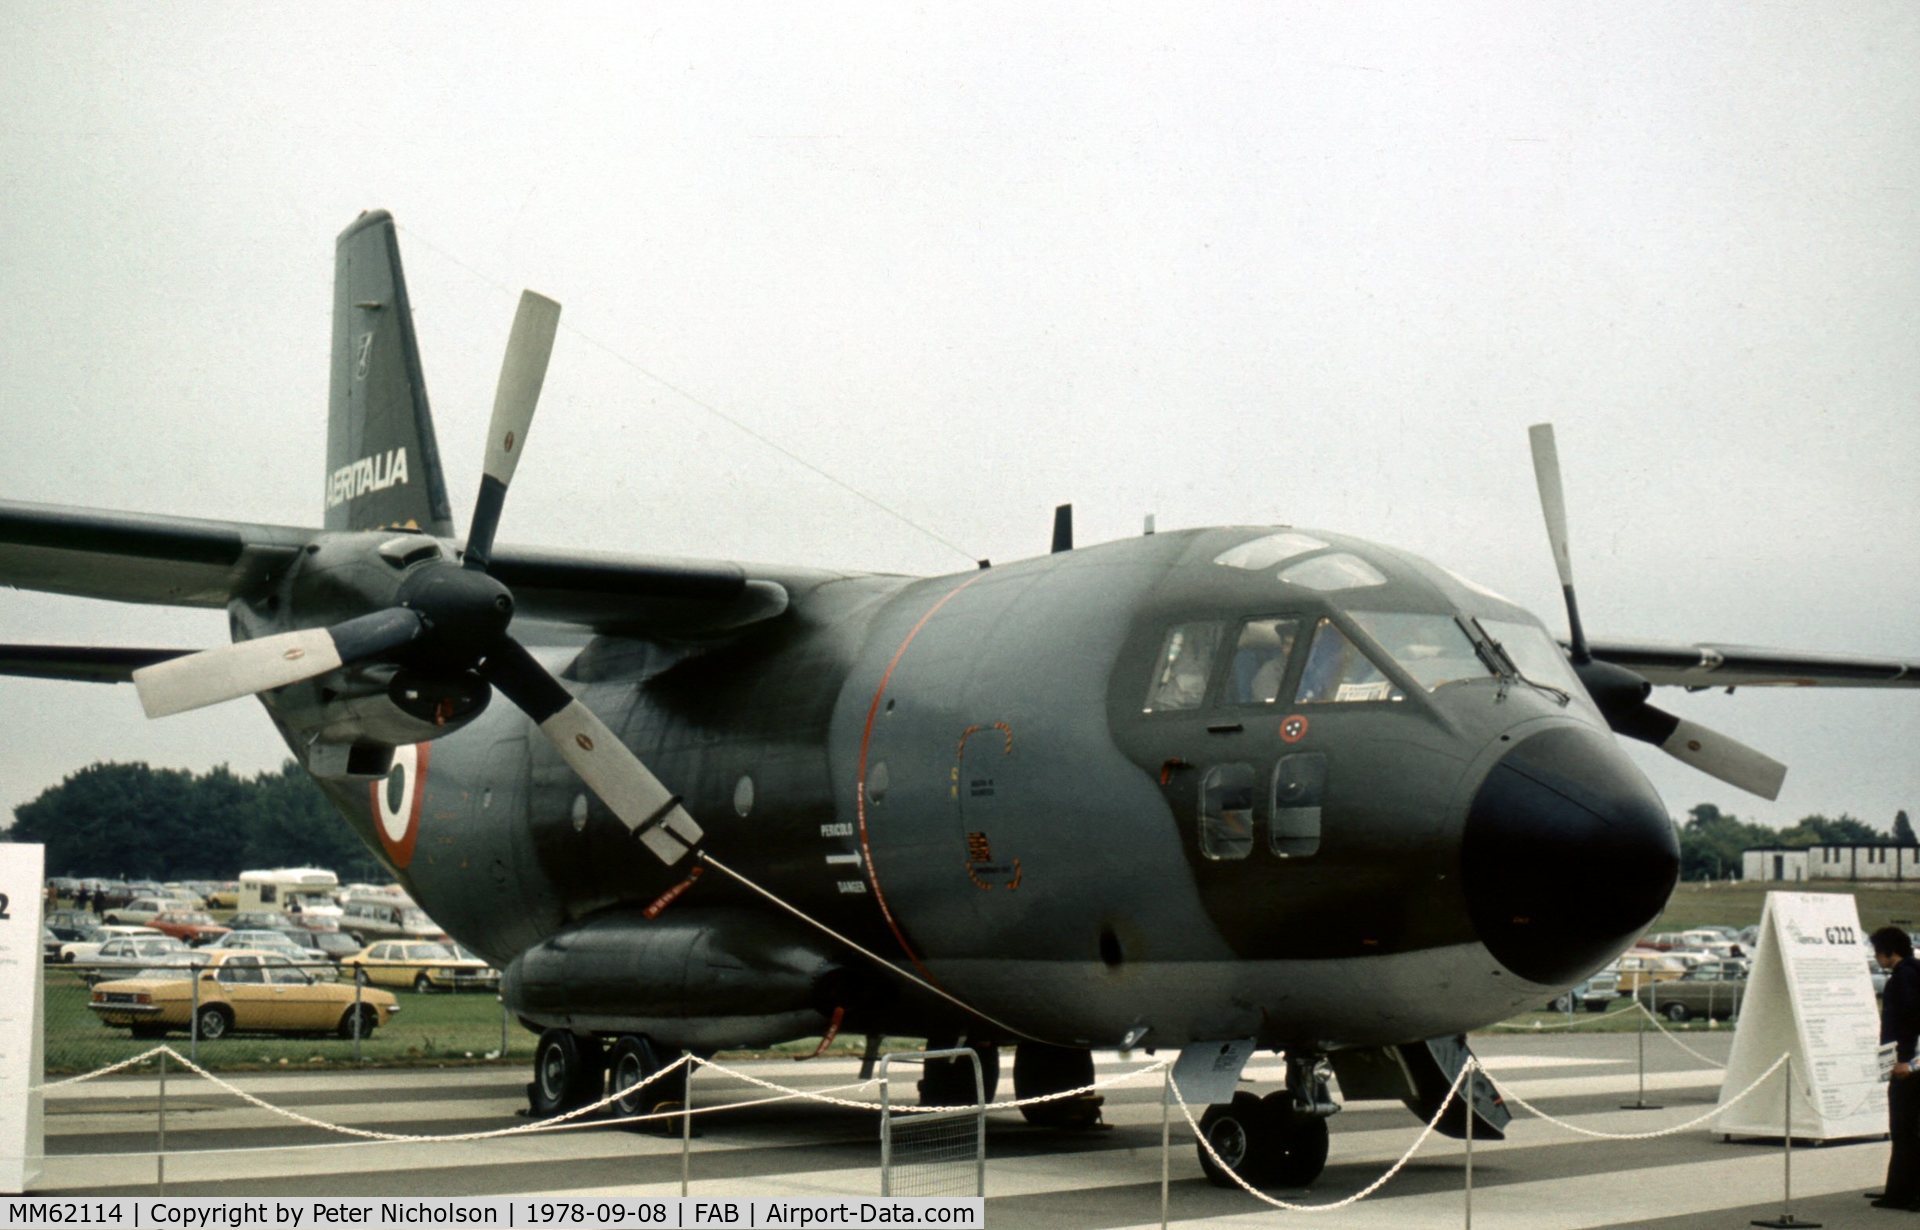 MM62114, Aeritalia G-222TCM C/N 4019, Aeritalia G.222 for the Italian Air Force was demonstrated at the 1978 Farnborough Airshow.